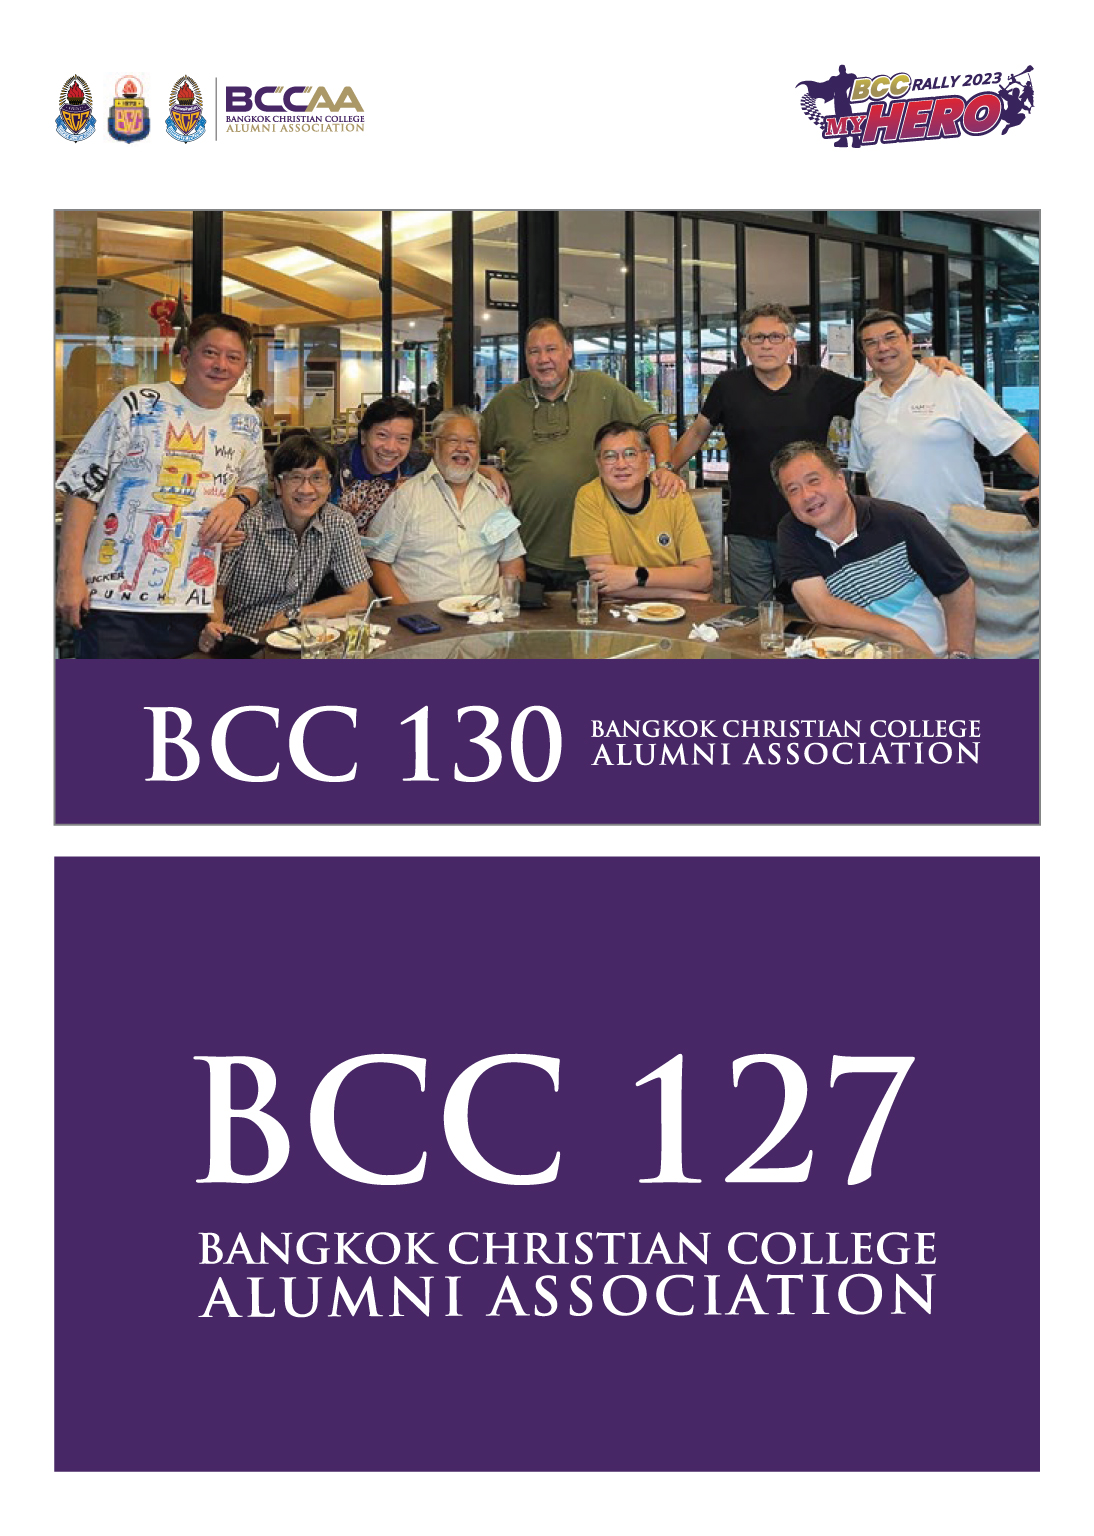 BCC RALLY 2023-2_1-24